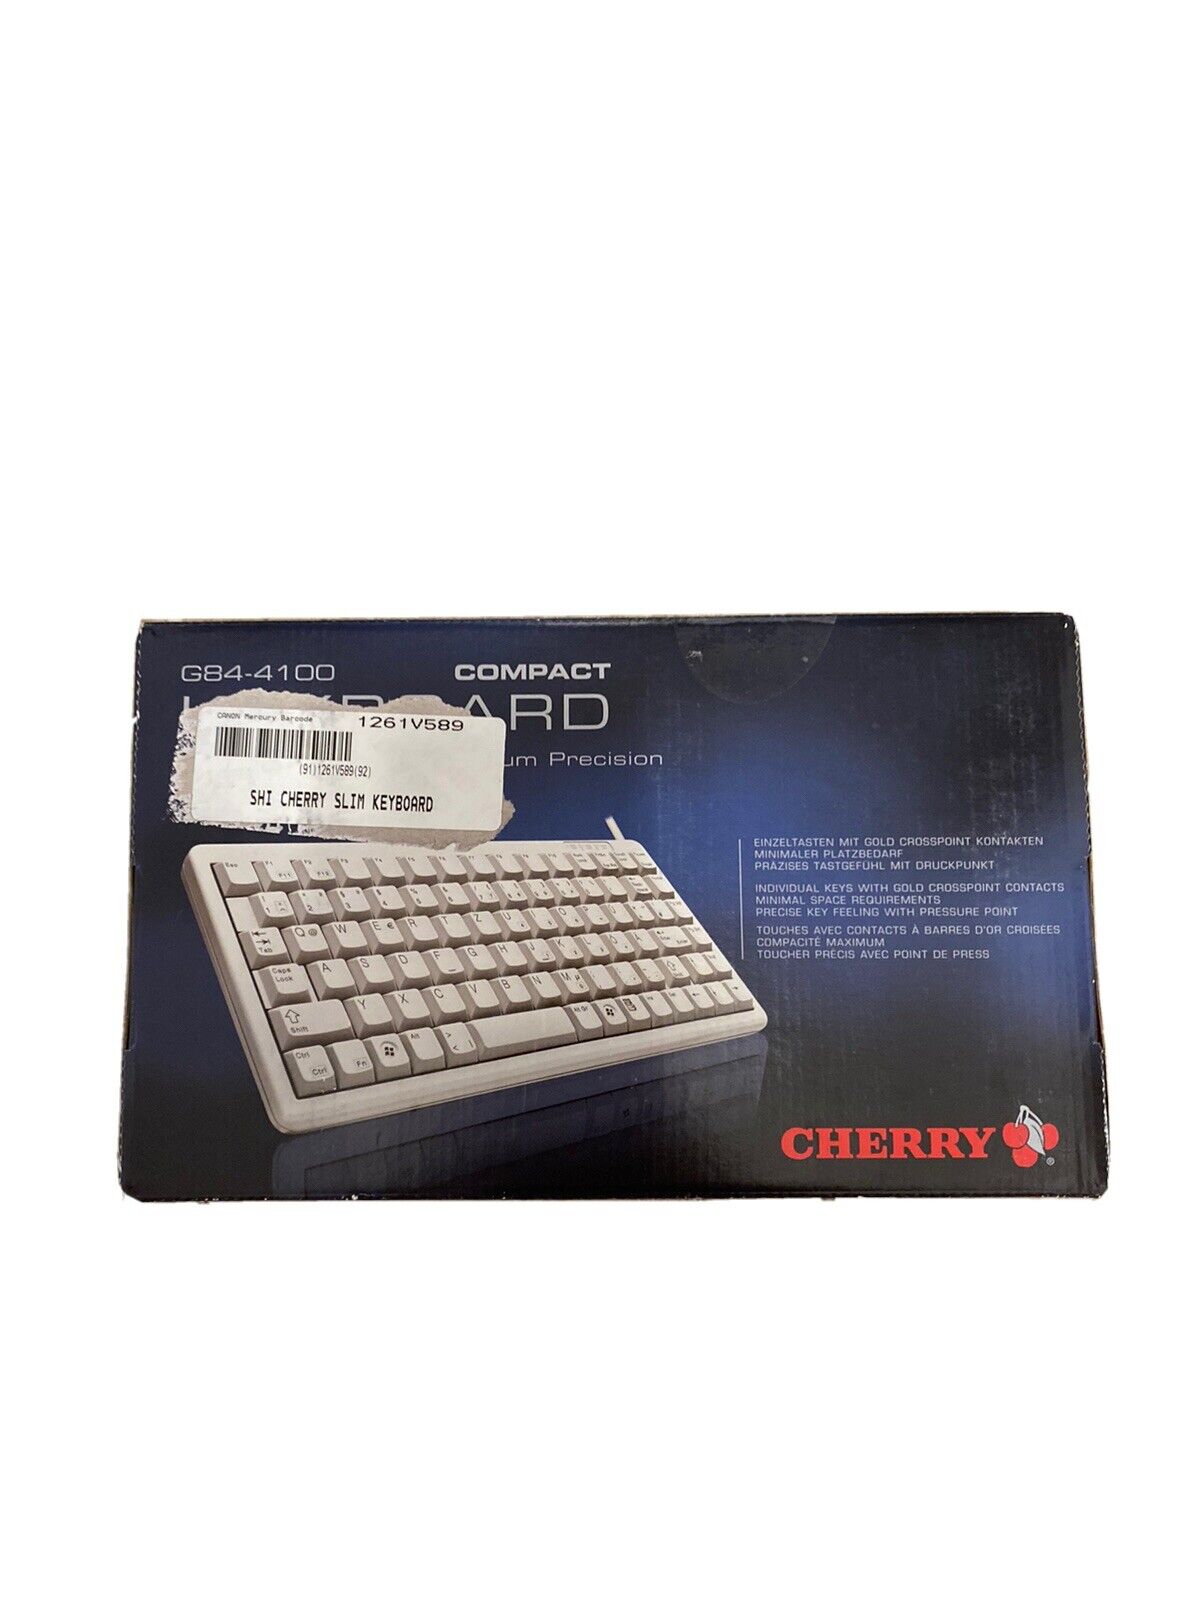 Cherry (G84-4100) Compact 60% Slim Keyboard - White *New Sealed*